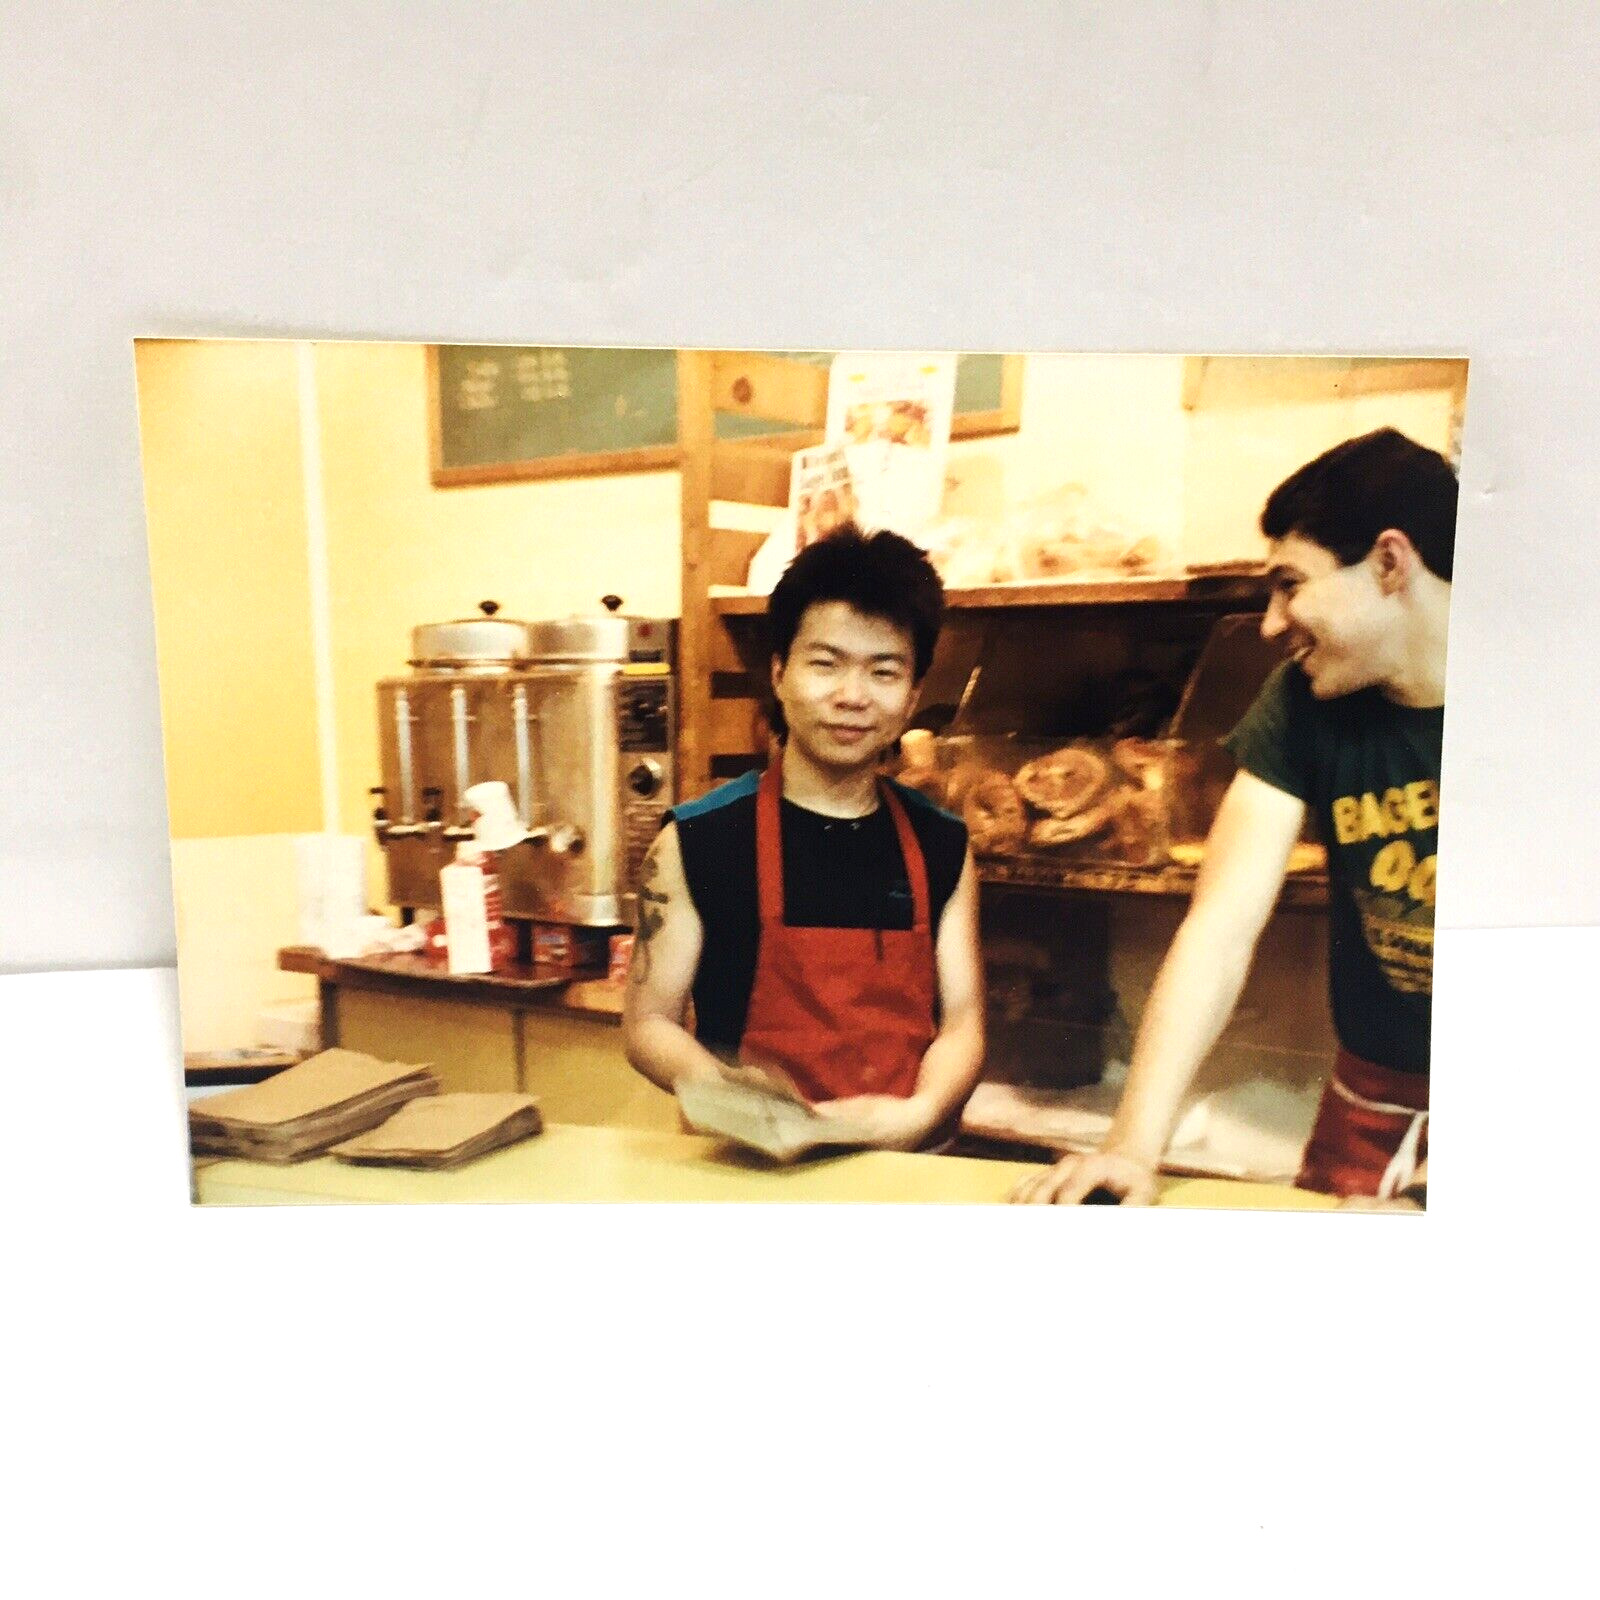 2 Guys Gaze Smiling Fun 1980s Gay Int Vintage Color Photo At Work Bagel Shop